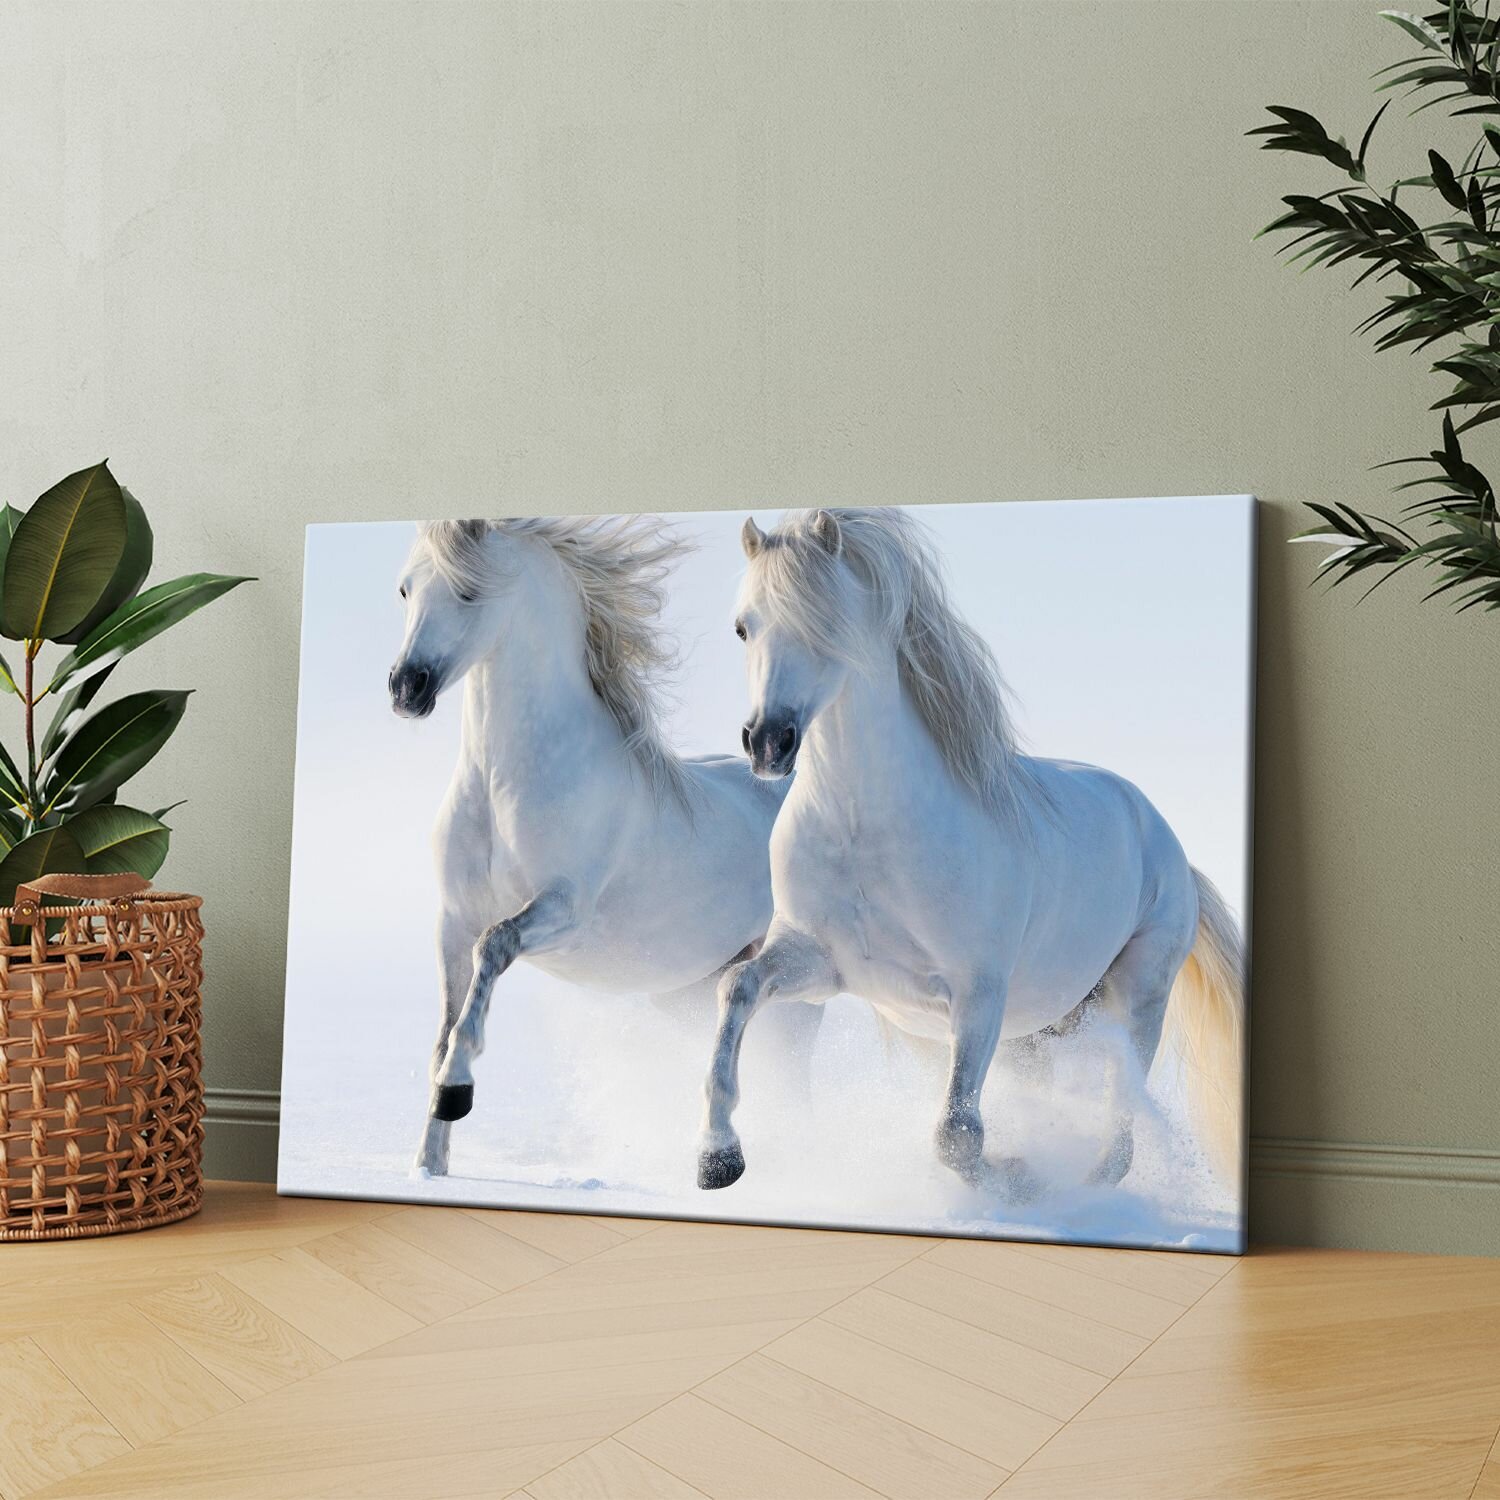 Картина на холсте (Две белые лошади бегут по снегу) 20x30 см. Интерьерная, на стену.